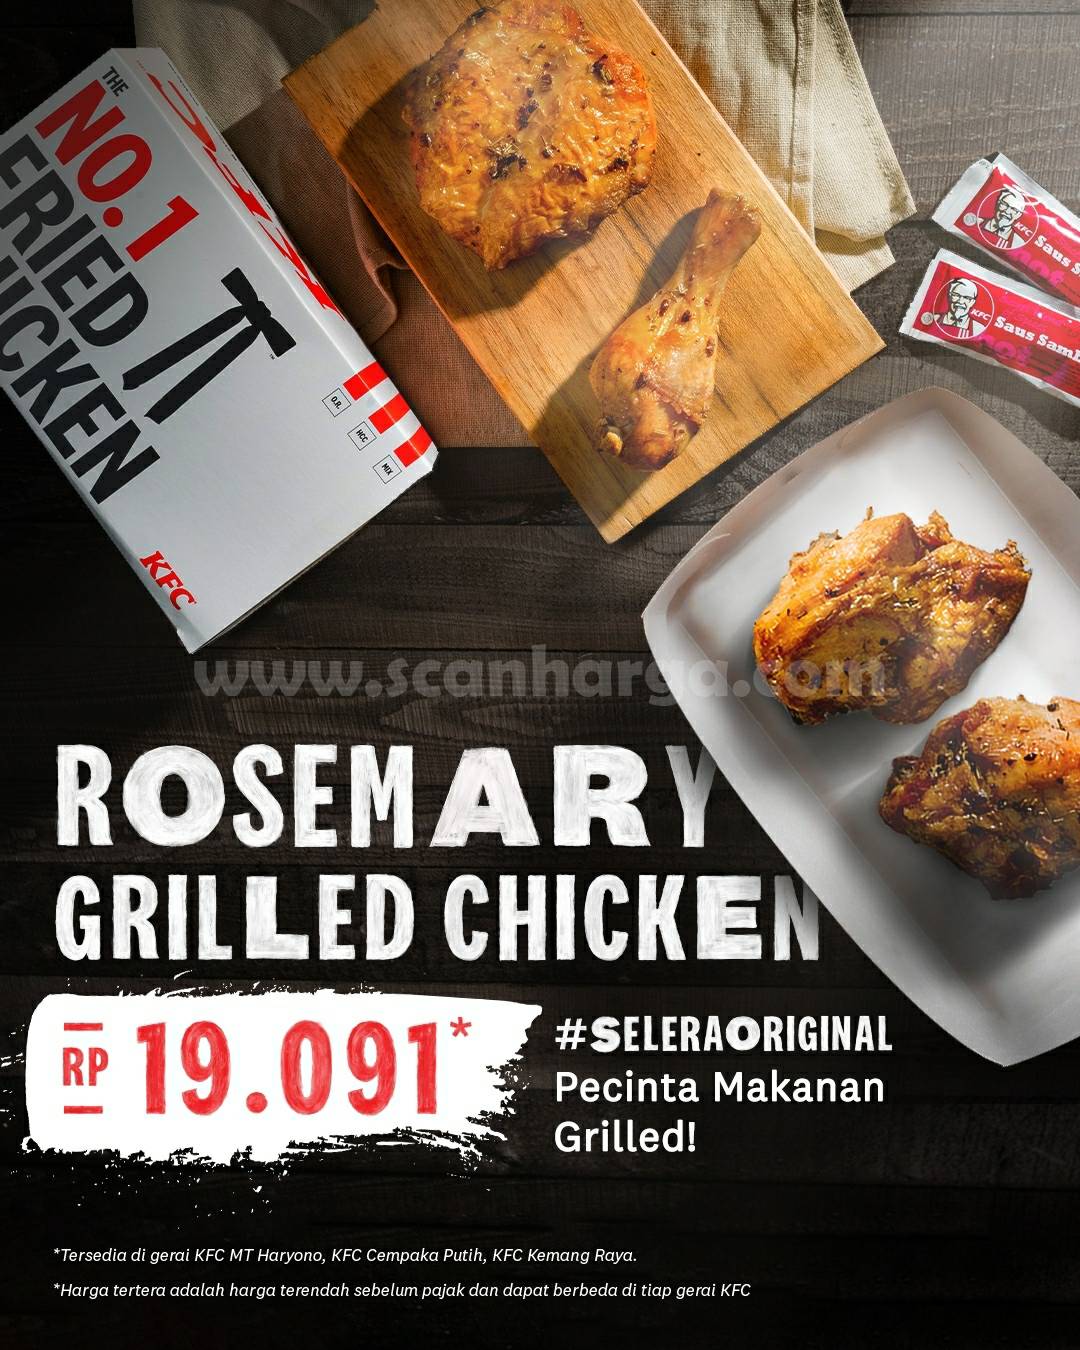 Promo KFC Rosemary Grilled chicken Harga Spesial hanya Rp. 19.091